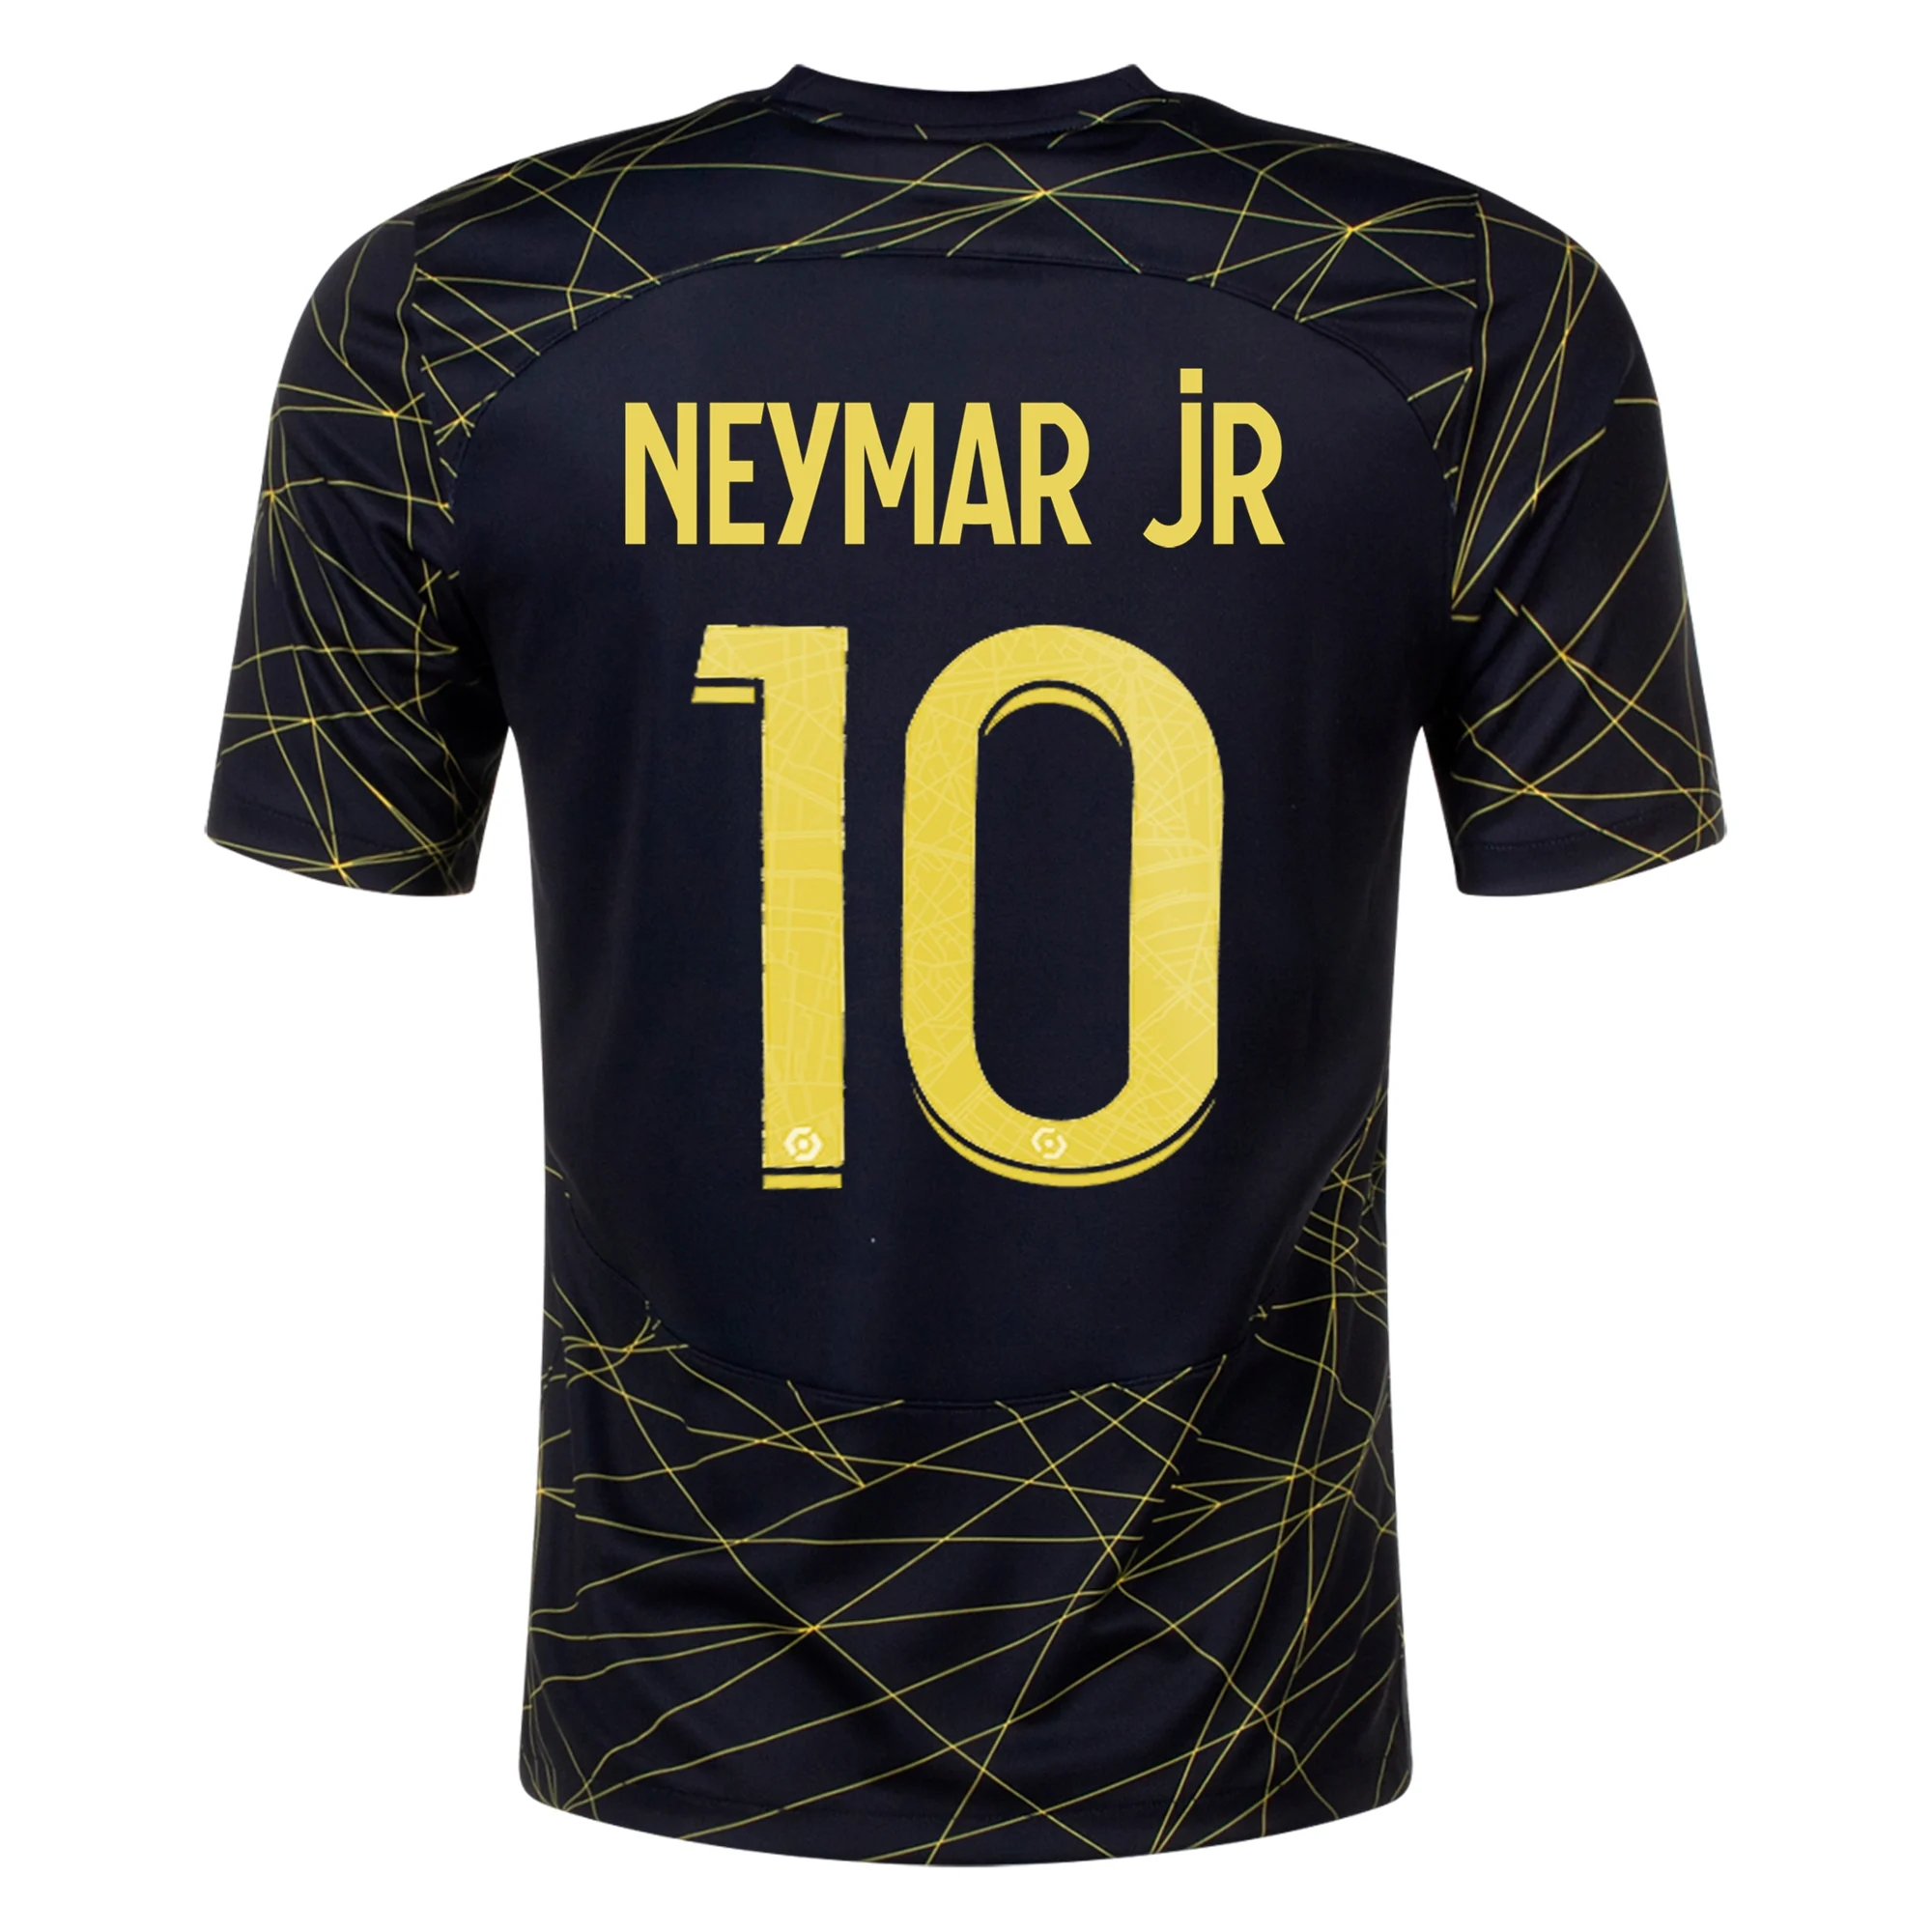 Neymar Paris Saint-Germain (PSG) 22/23 Fourth Jersey by Nike